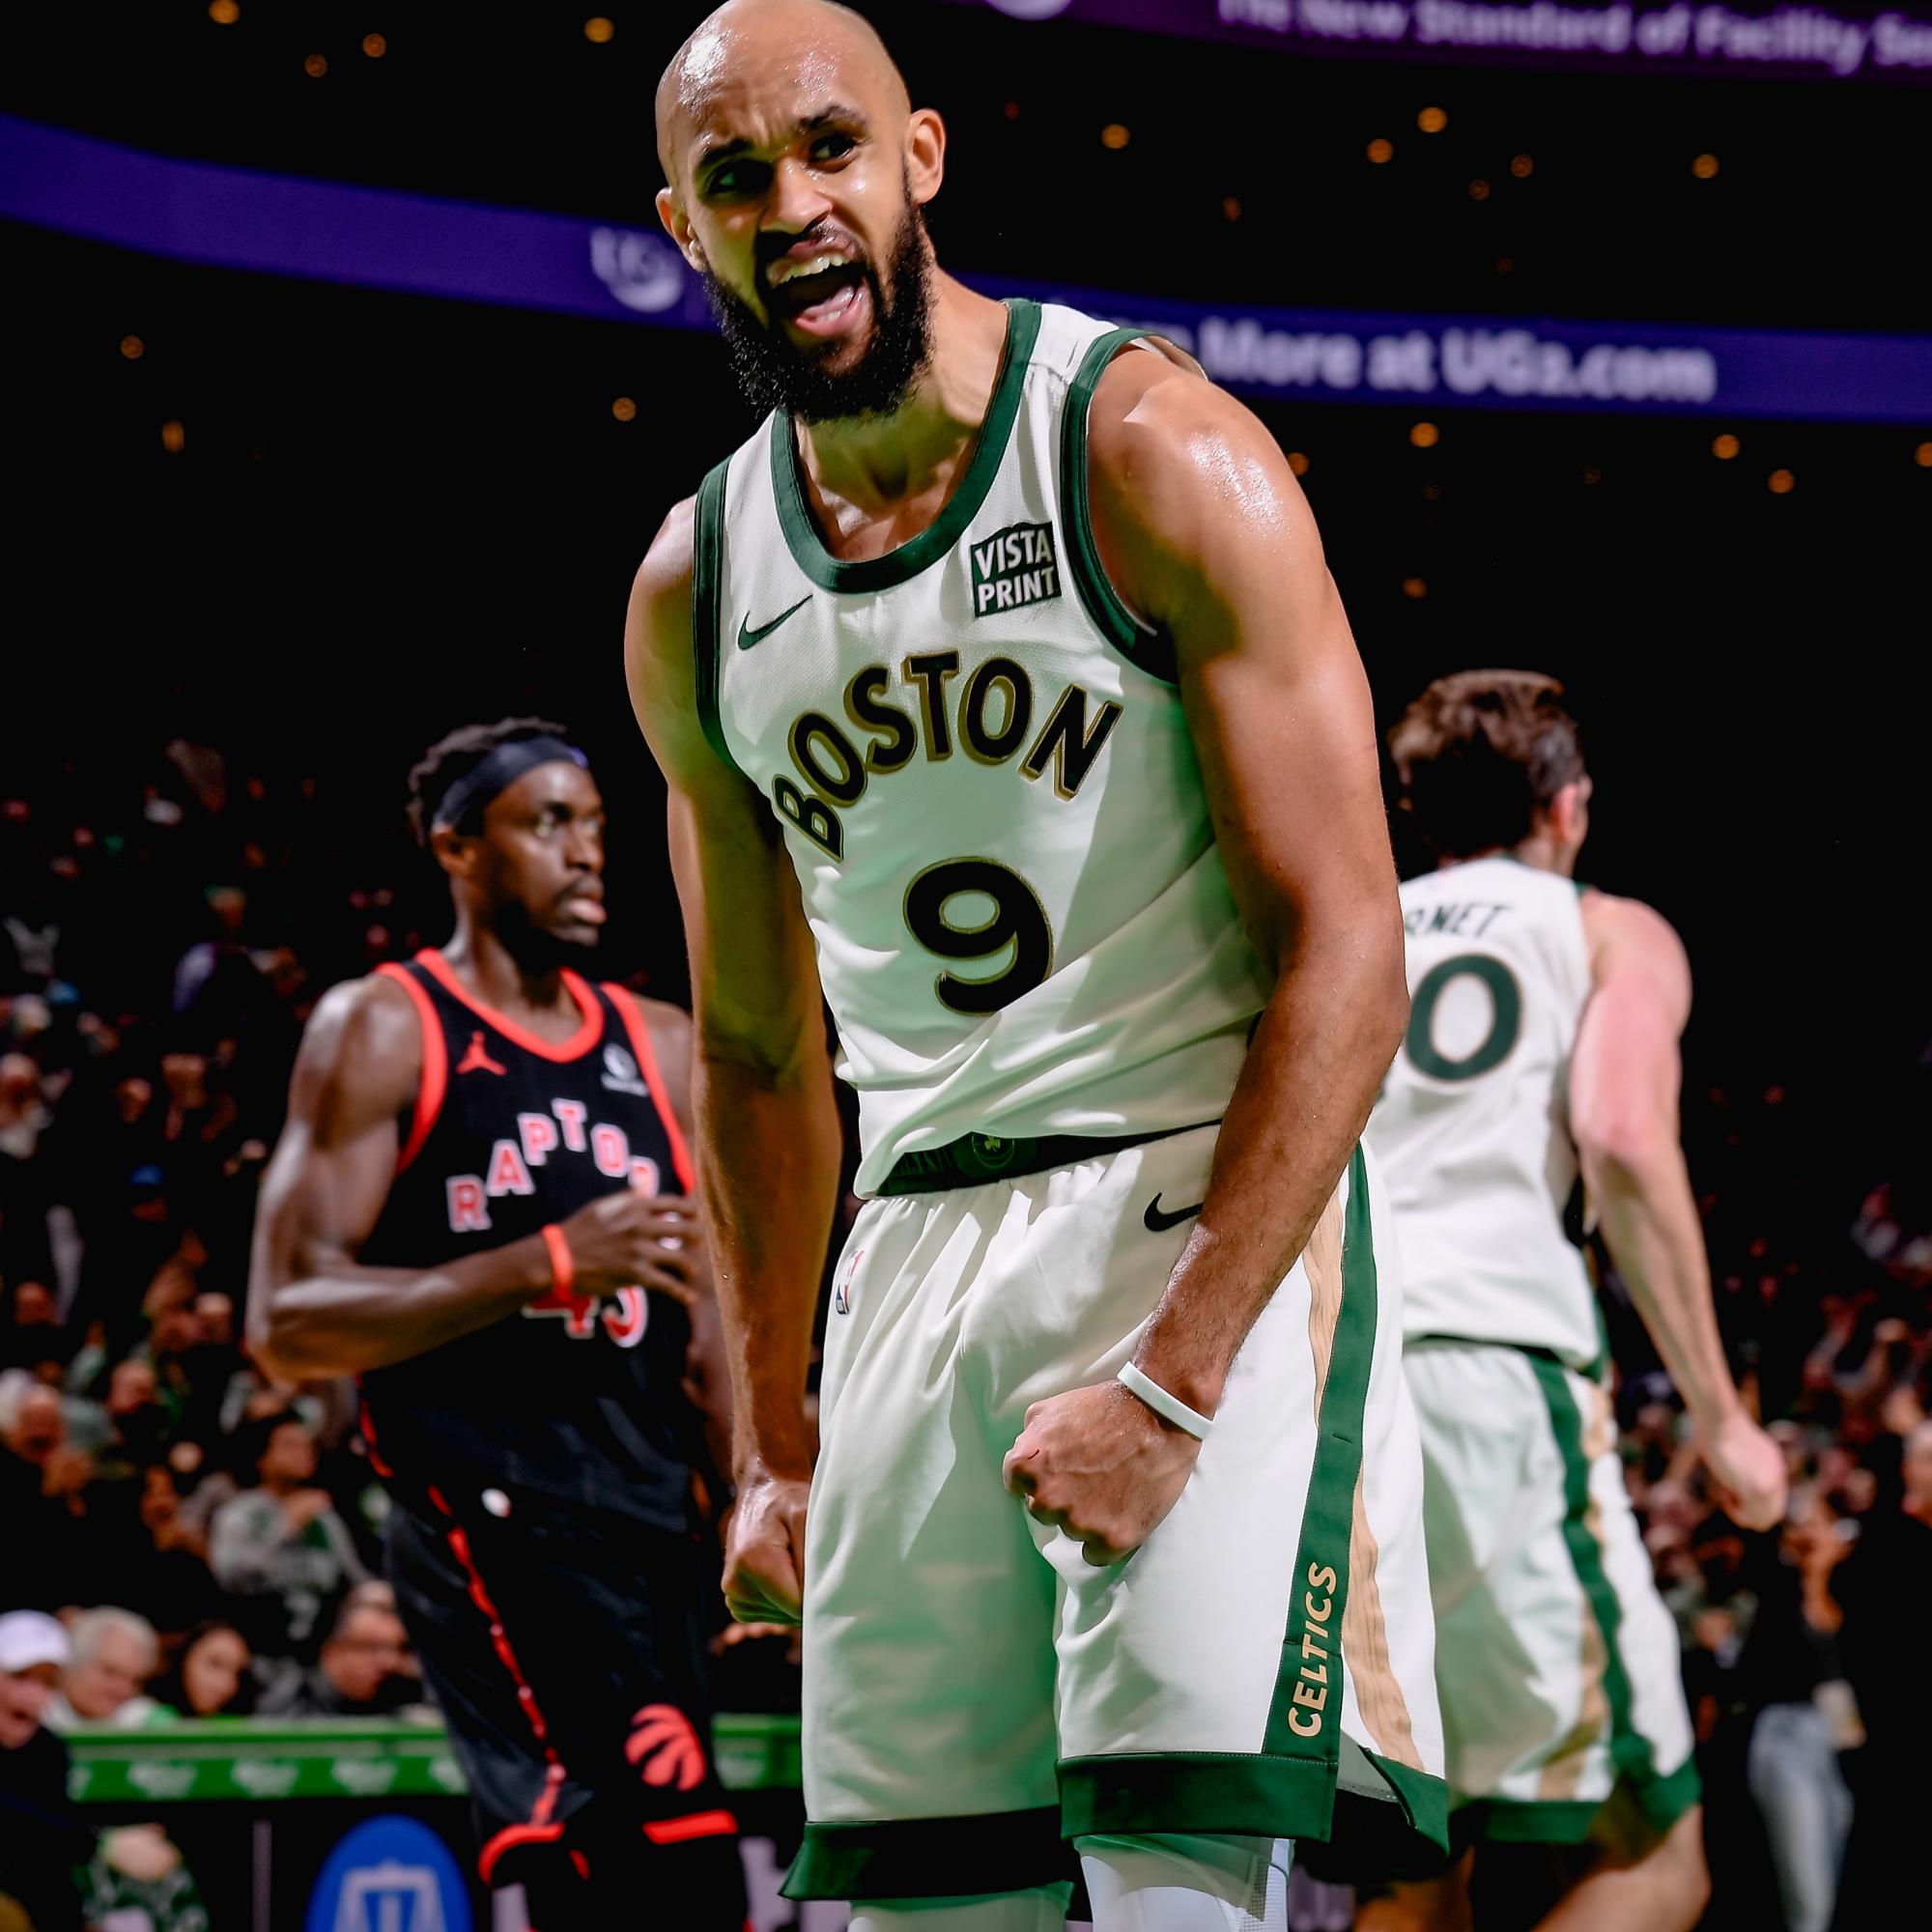 $!Celtics suda de más, pero gana al final a Raptors